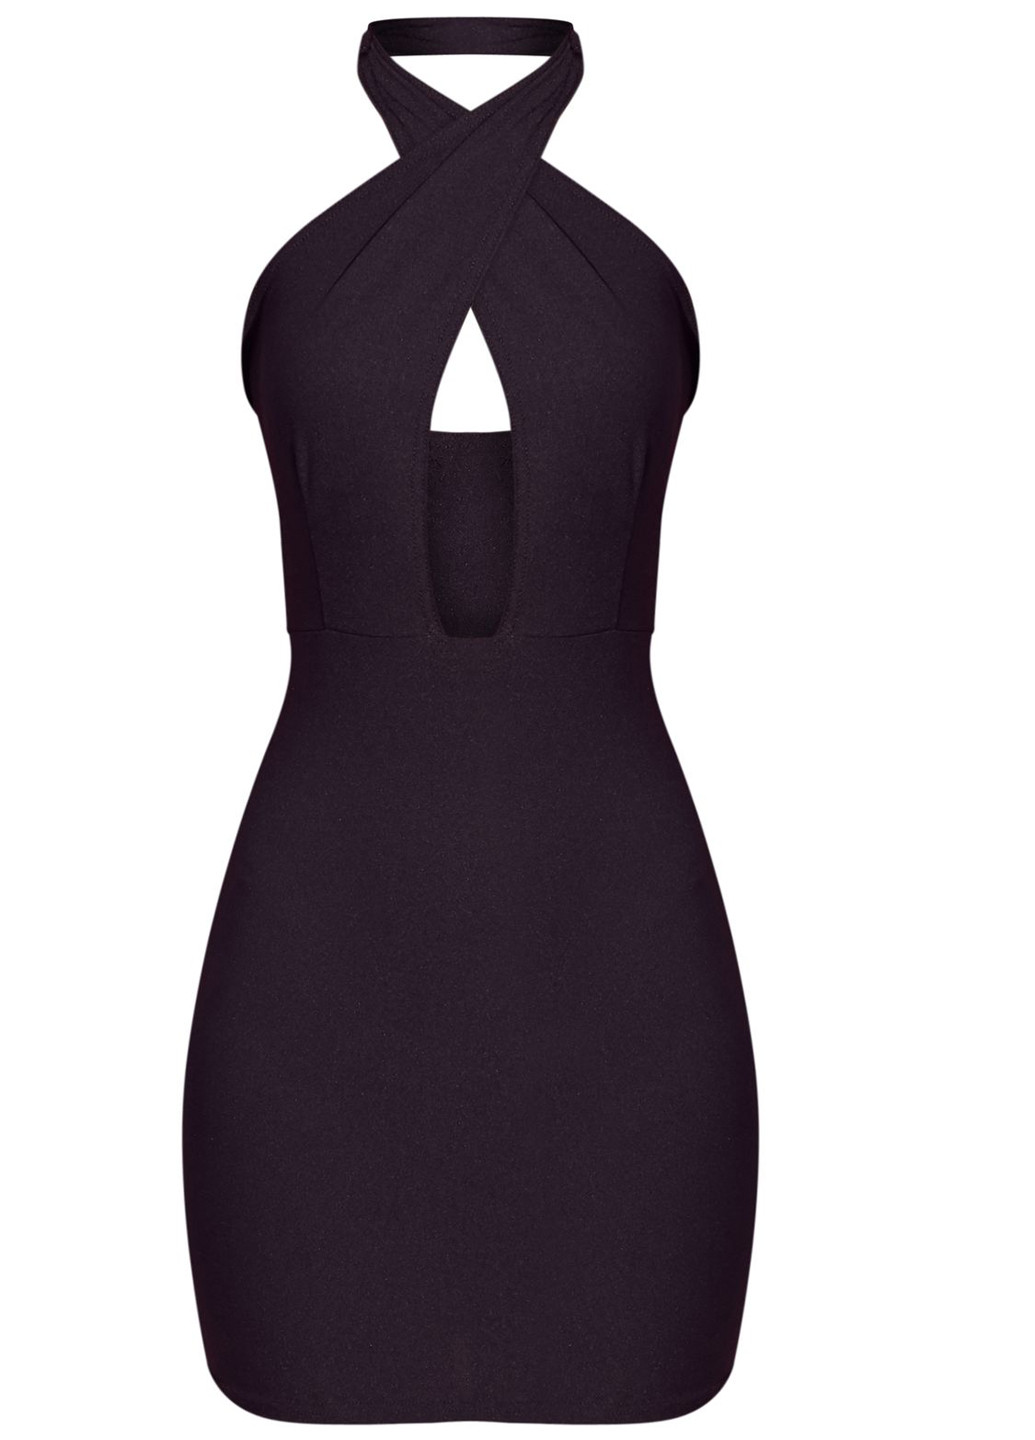 Черное коктейльное платье футляр PrettyLittleThing однотонное